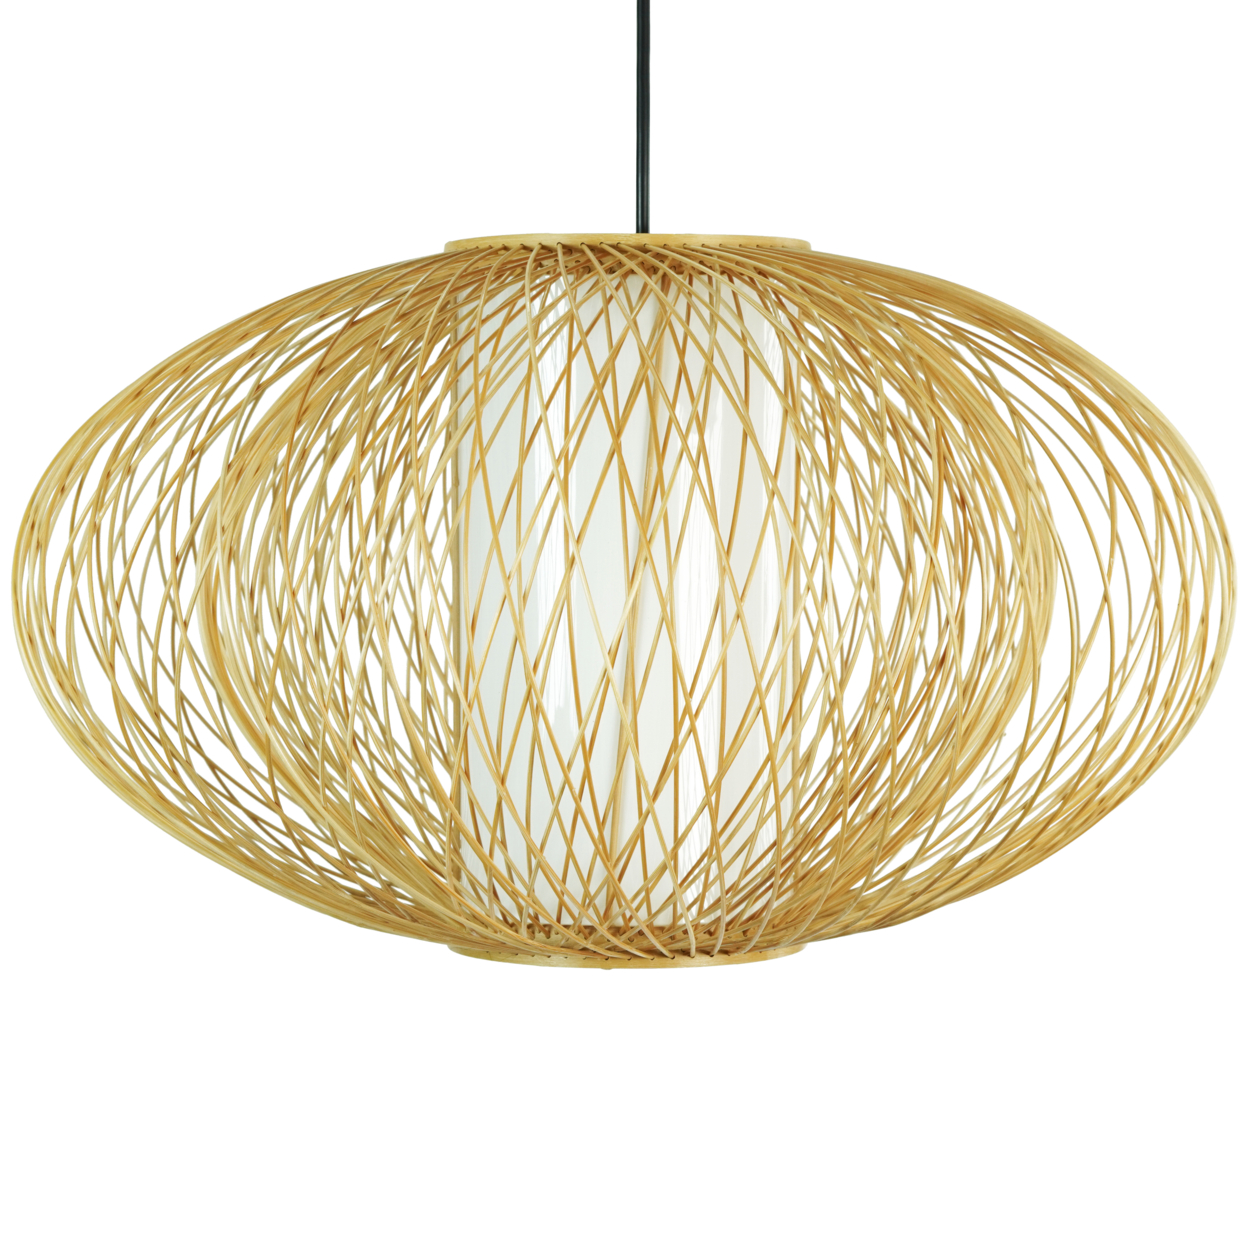 Modern Bamboo Wicker Rattan Hanging Light Shade For Living Room, Dining Room, Entryway - Medium